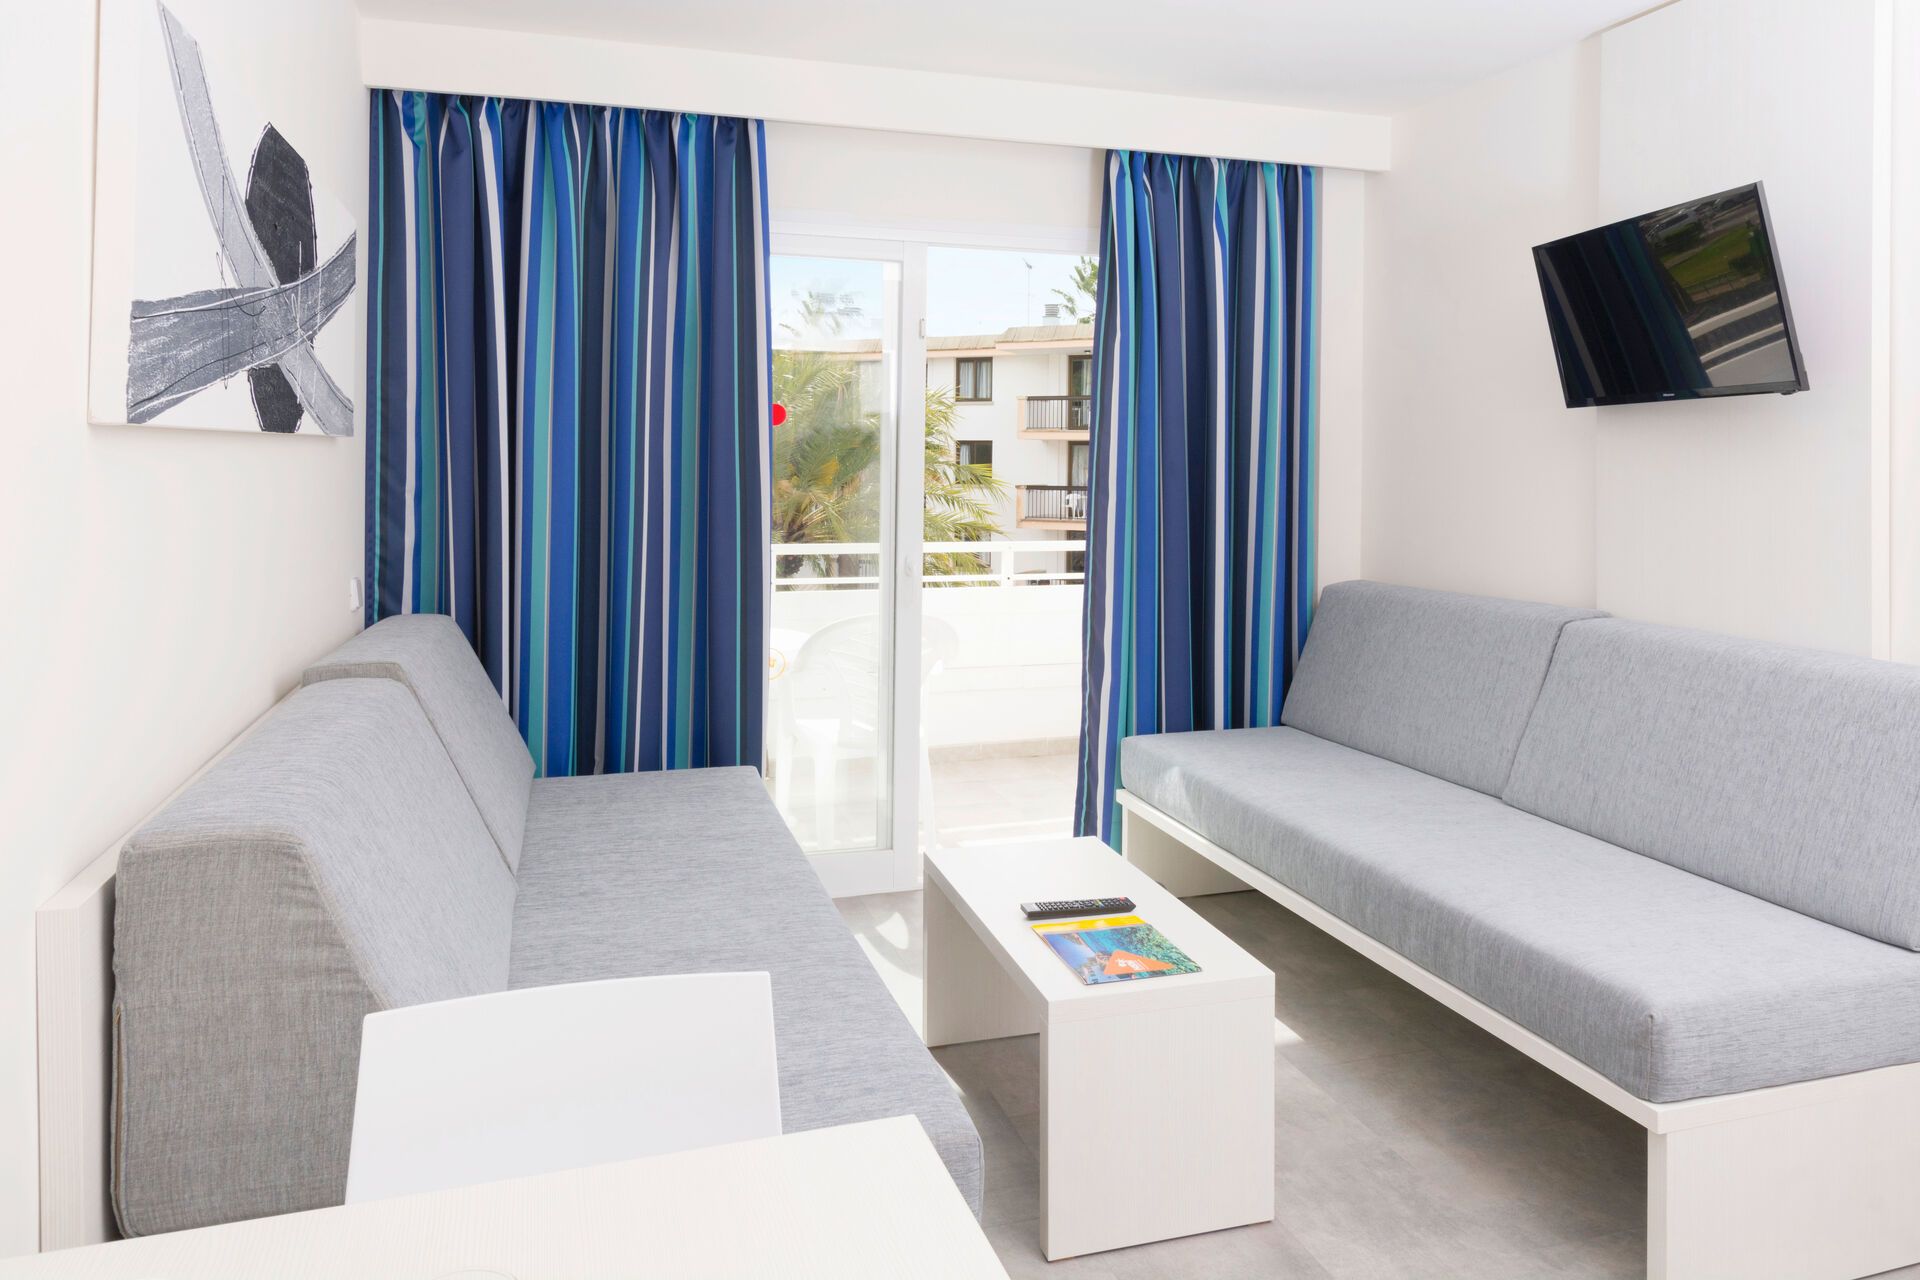 Baléares - Majorque - Espagne - Hotel HSM Lago Park Appartements 3*